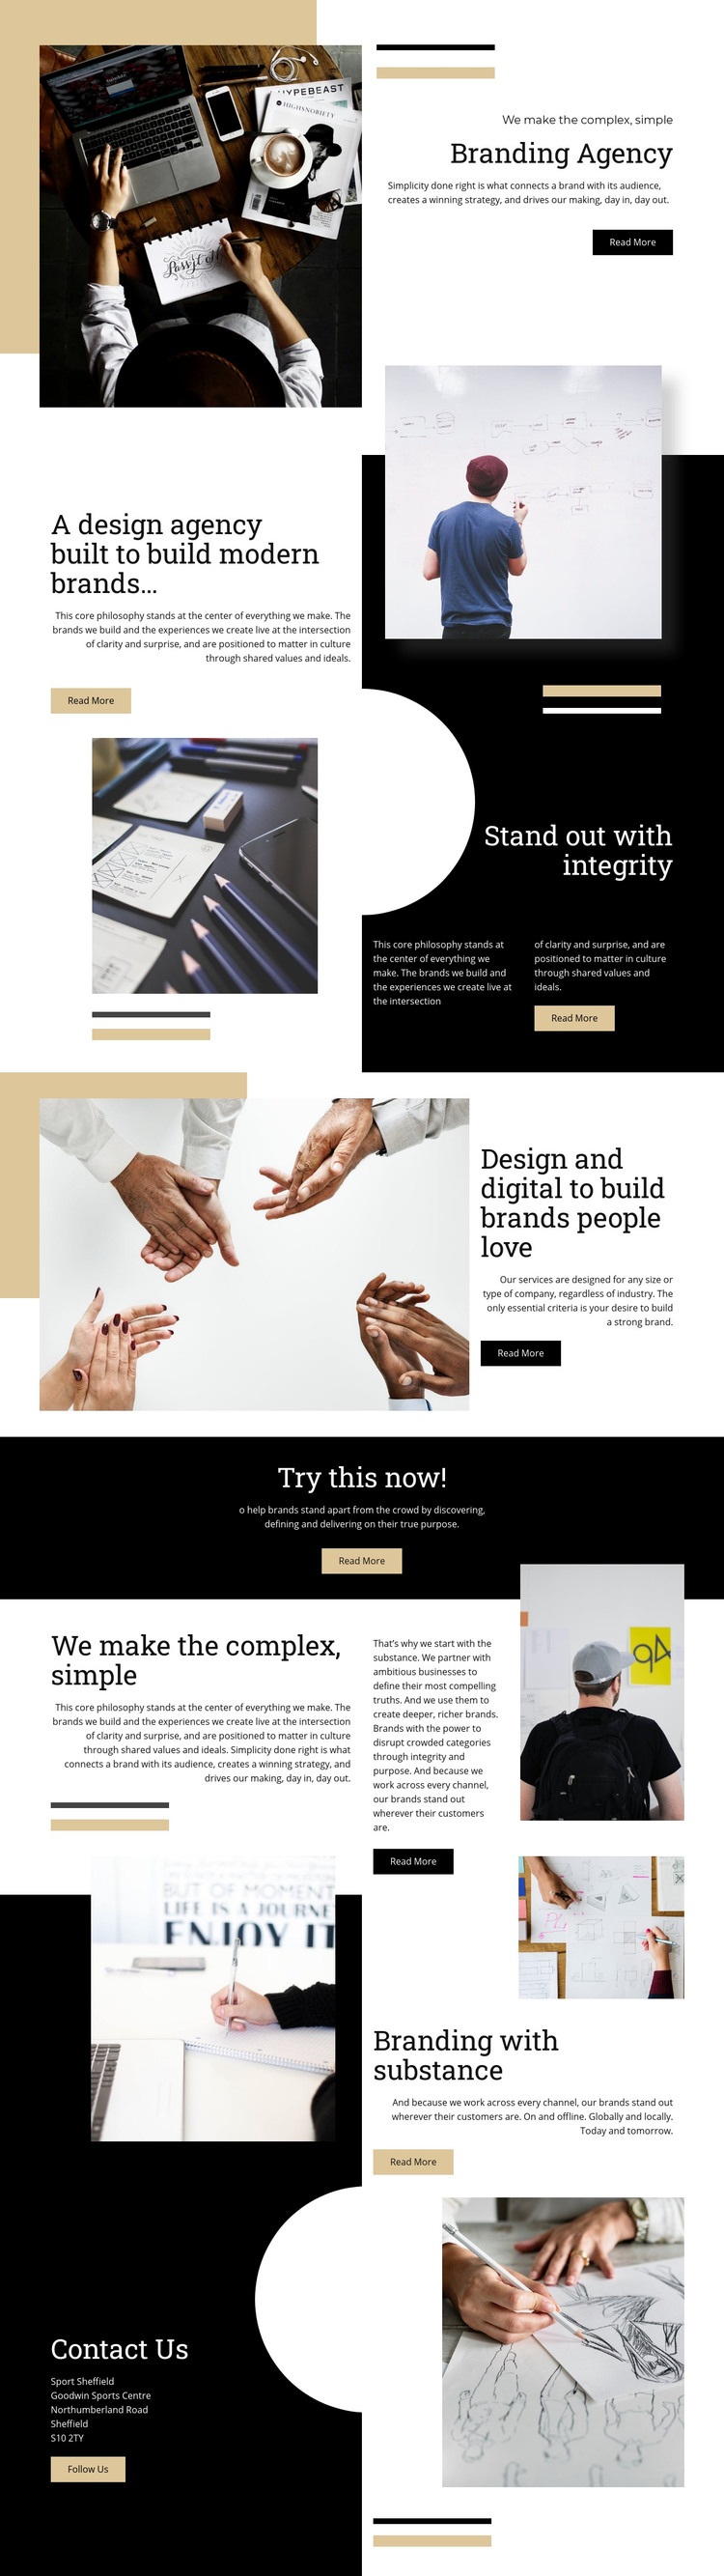 Branding Agency Homepage Design